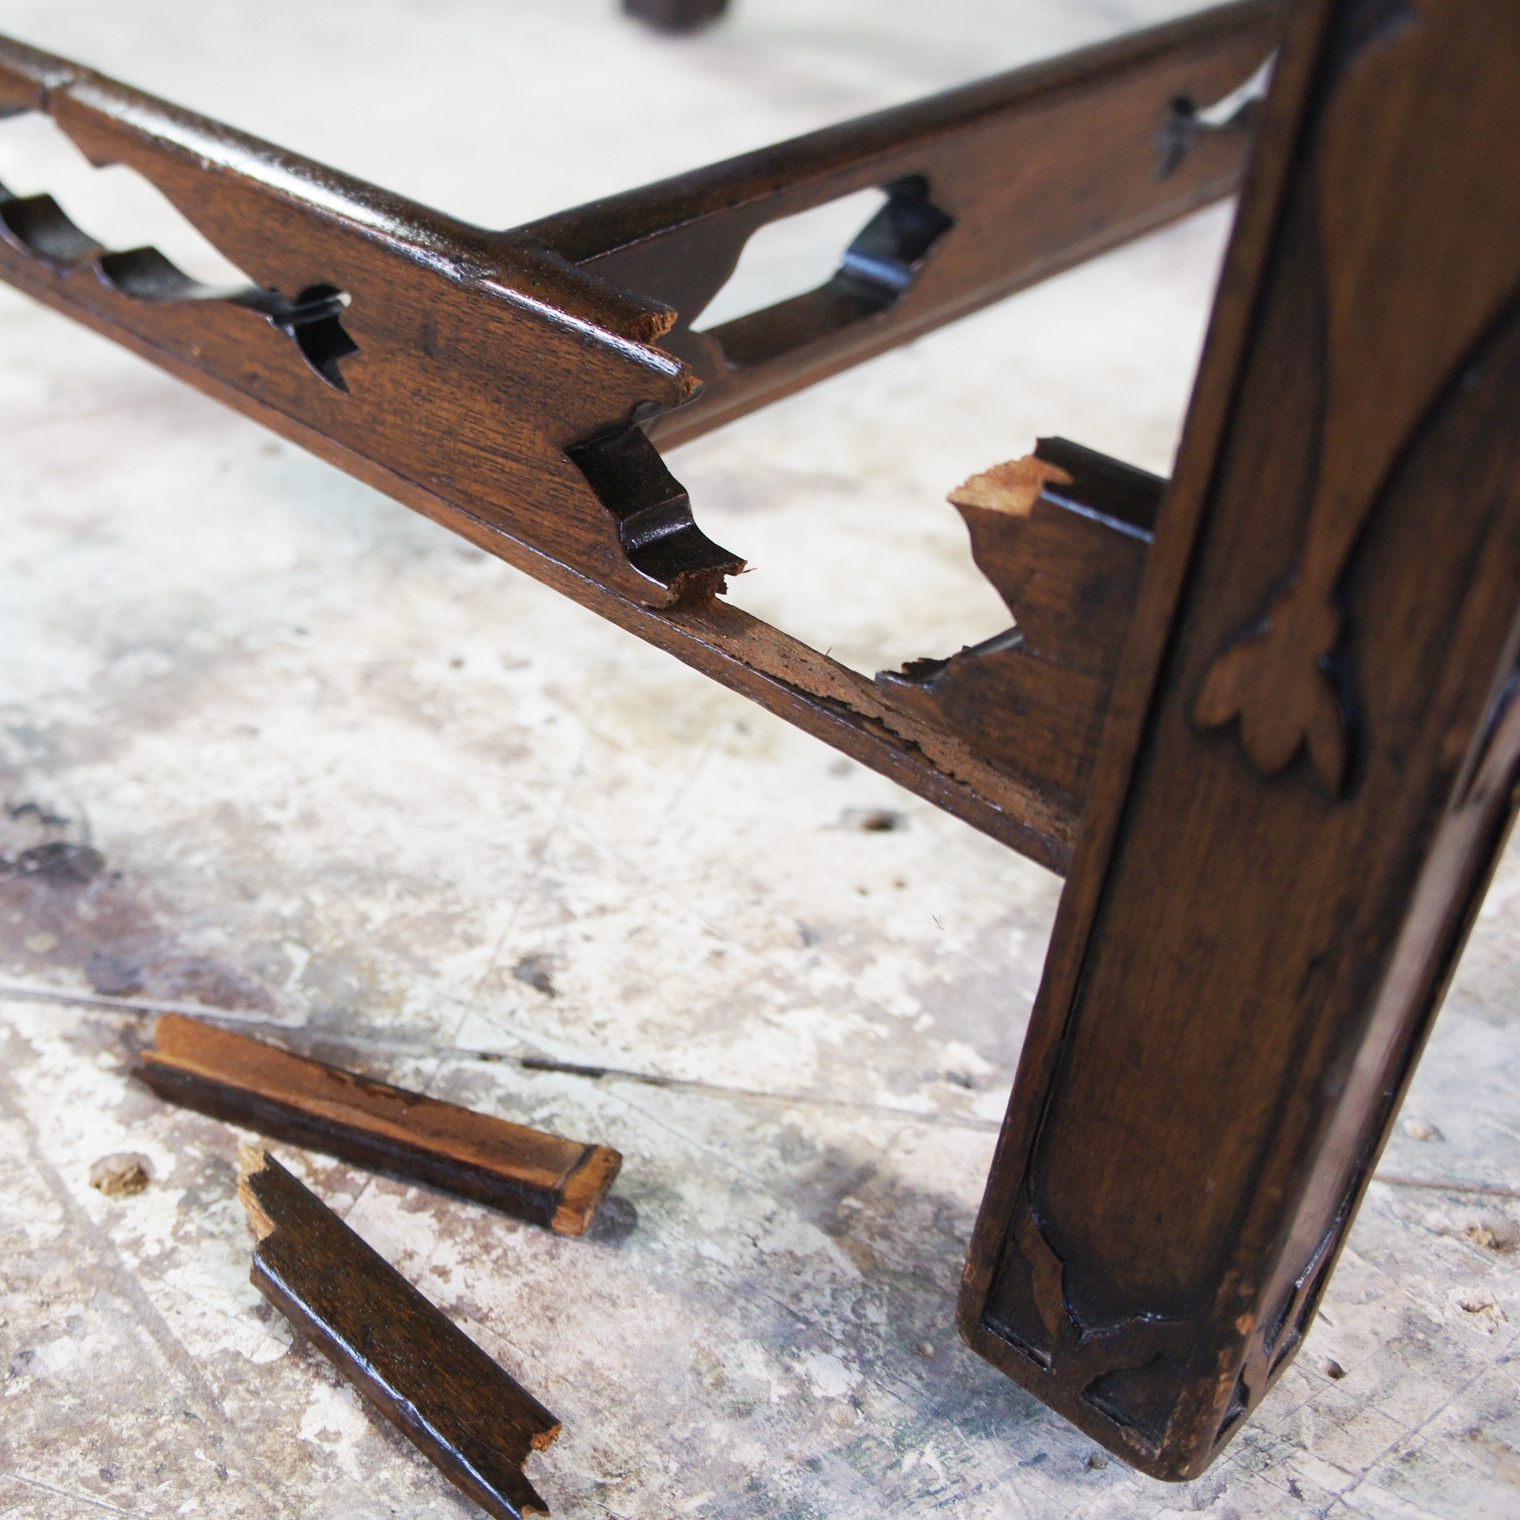 Wood Furniture Repair Broken Chair, How To Fix Wooden Dining Chair Legs